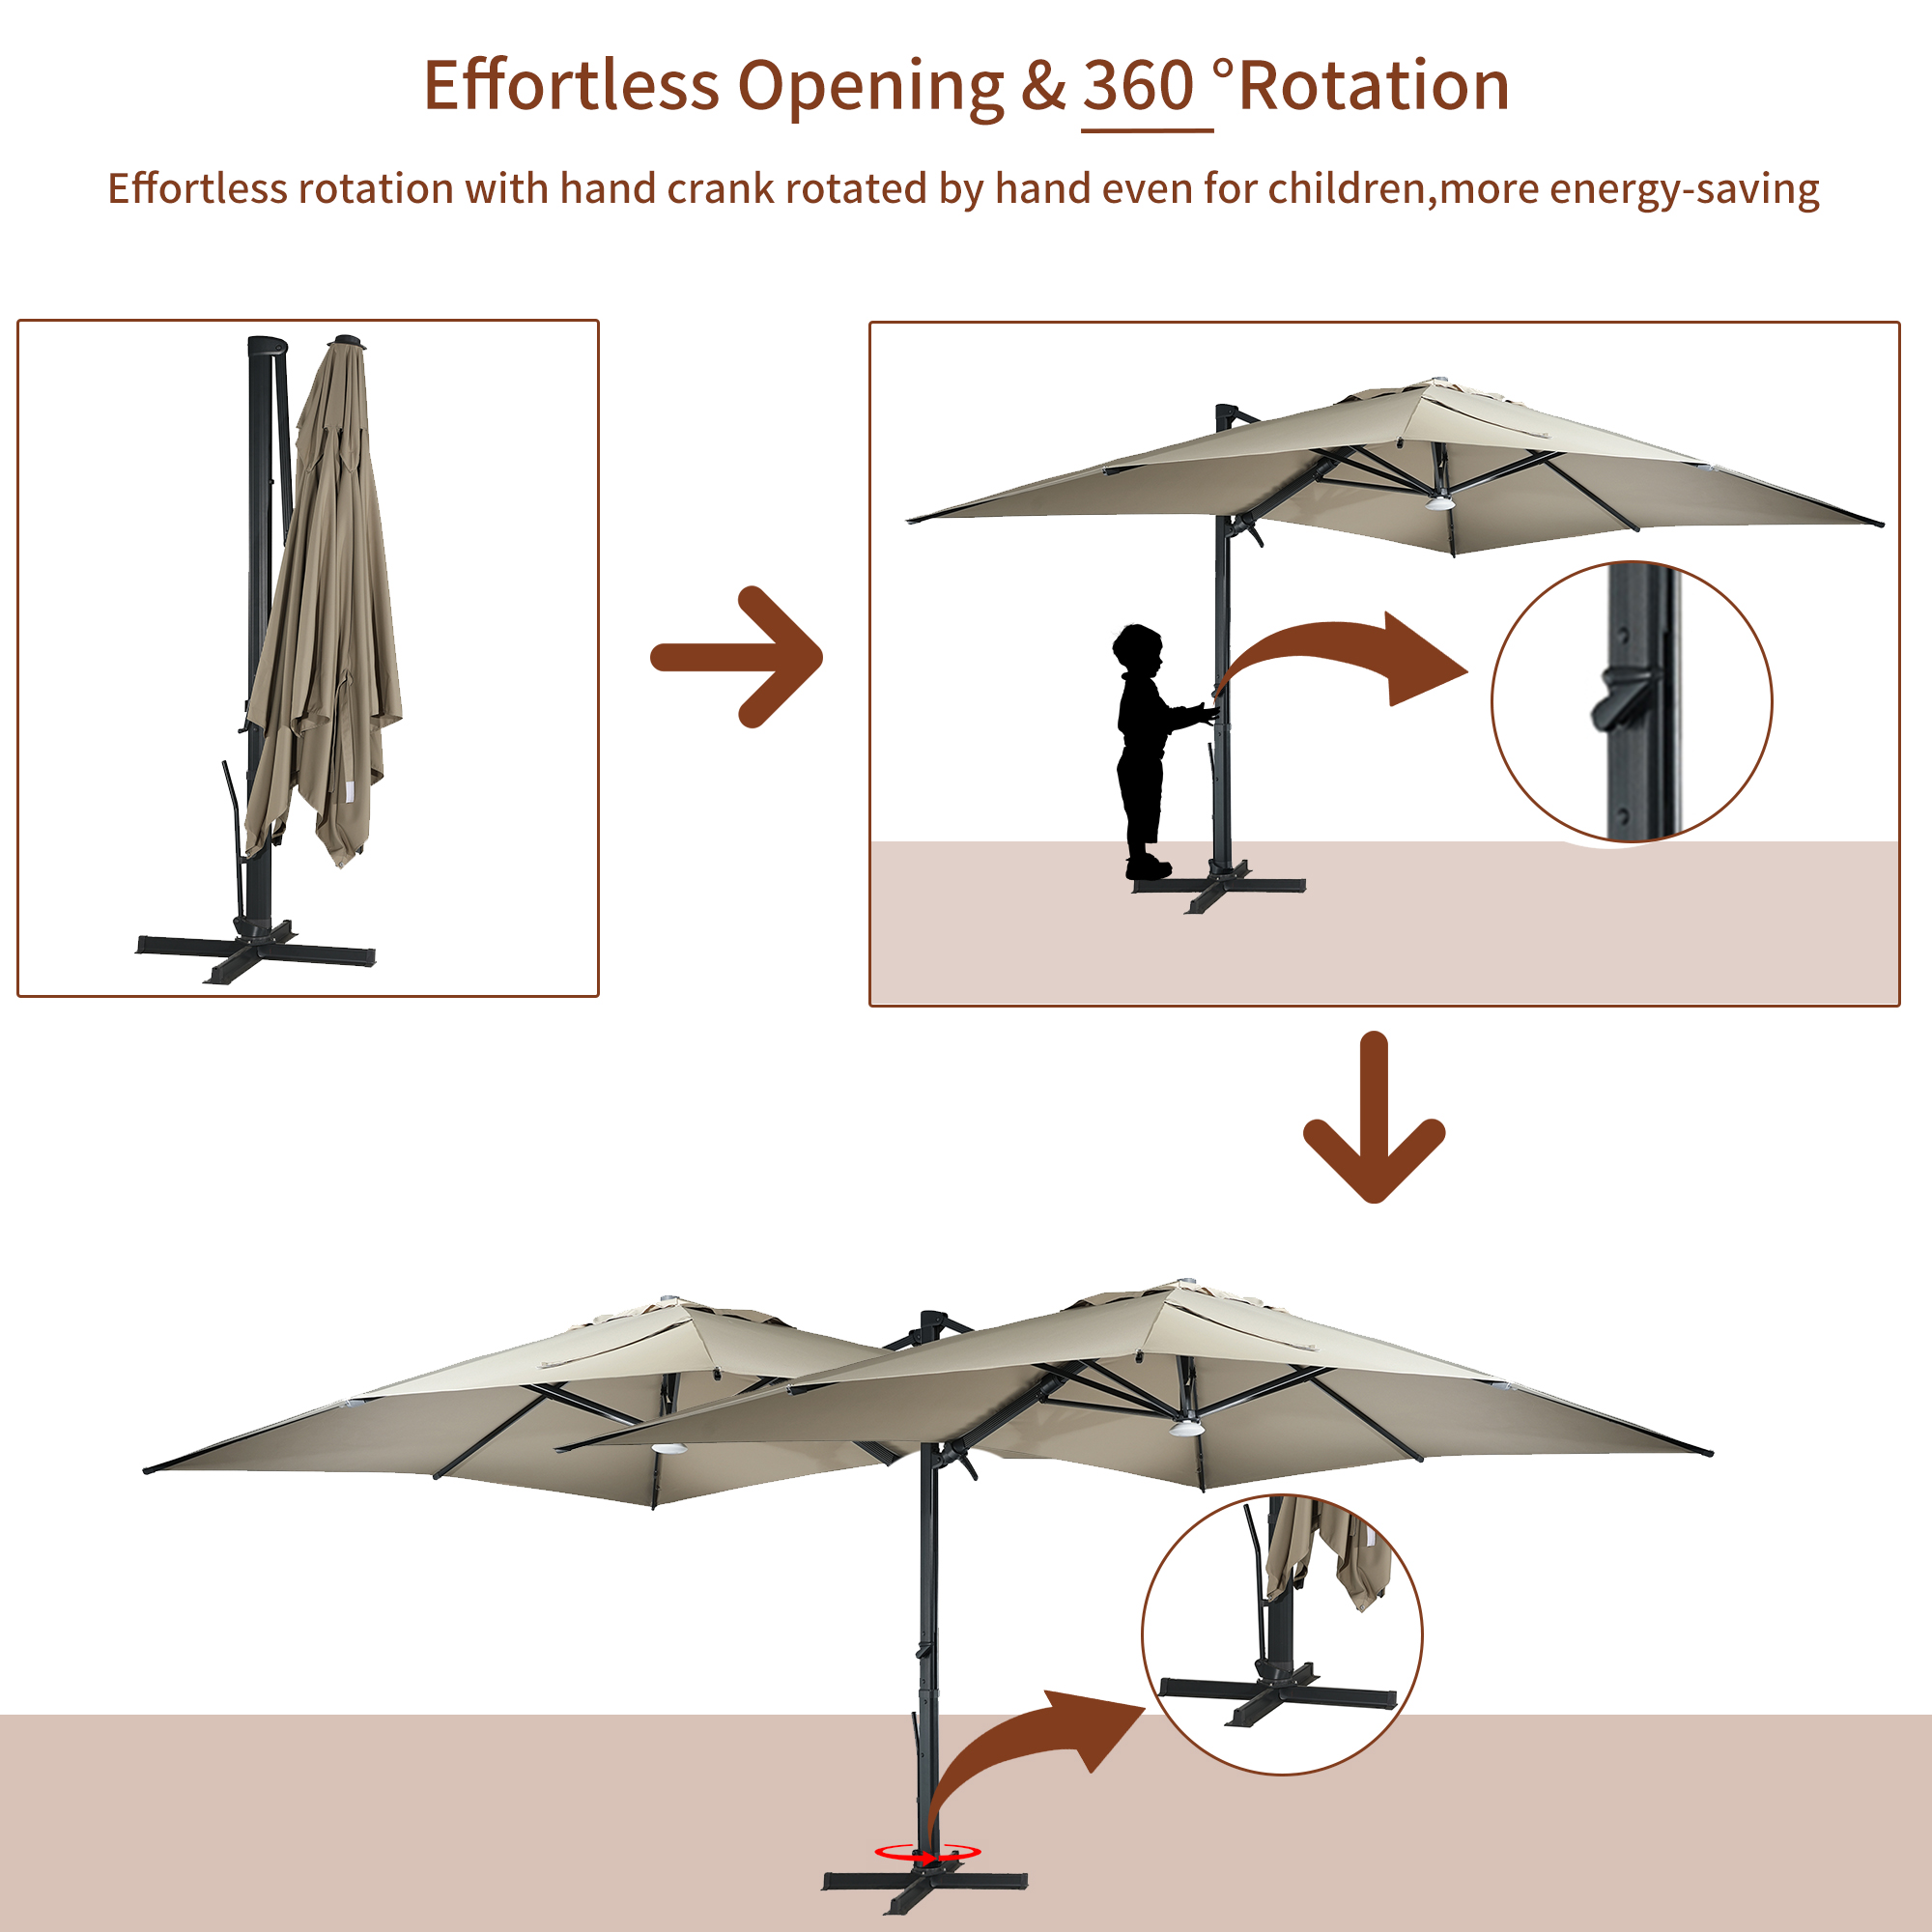 10ft Square Aluminum 90° Adjustable Tilt Umbrella with Base for Outdoor Patio Umbrella-Mondawe